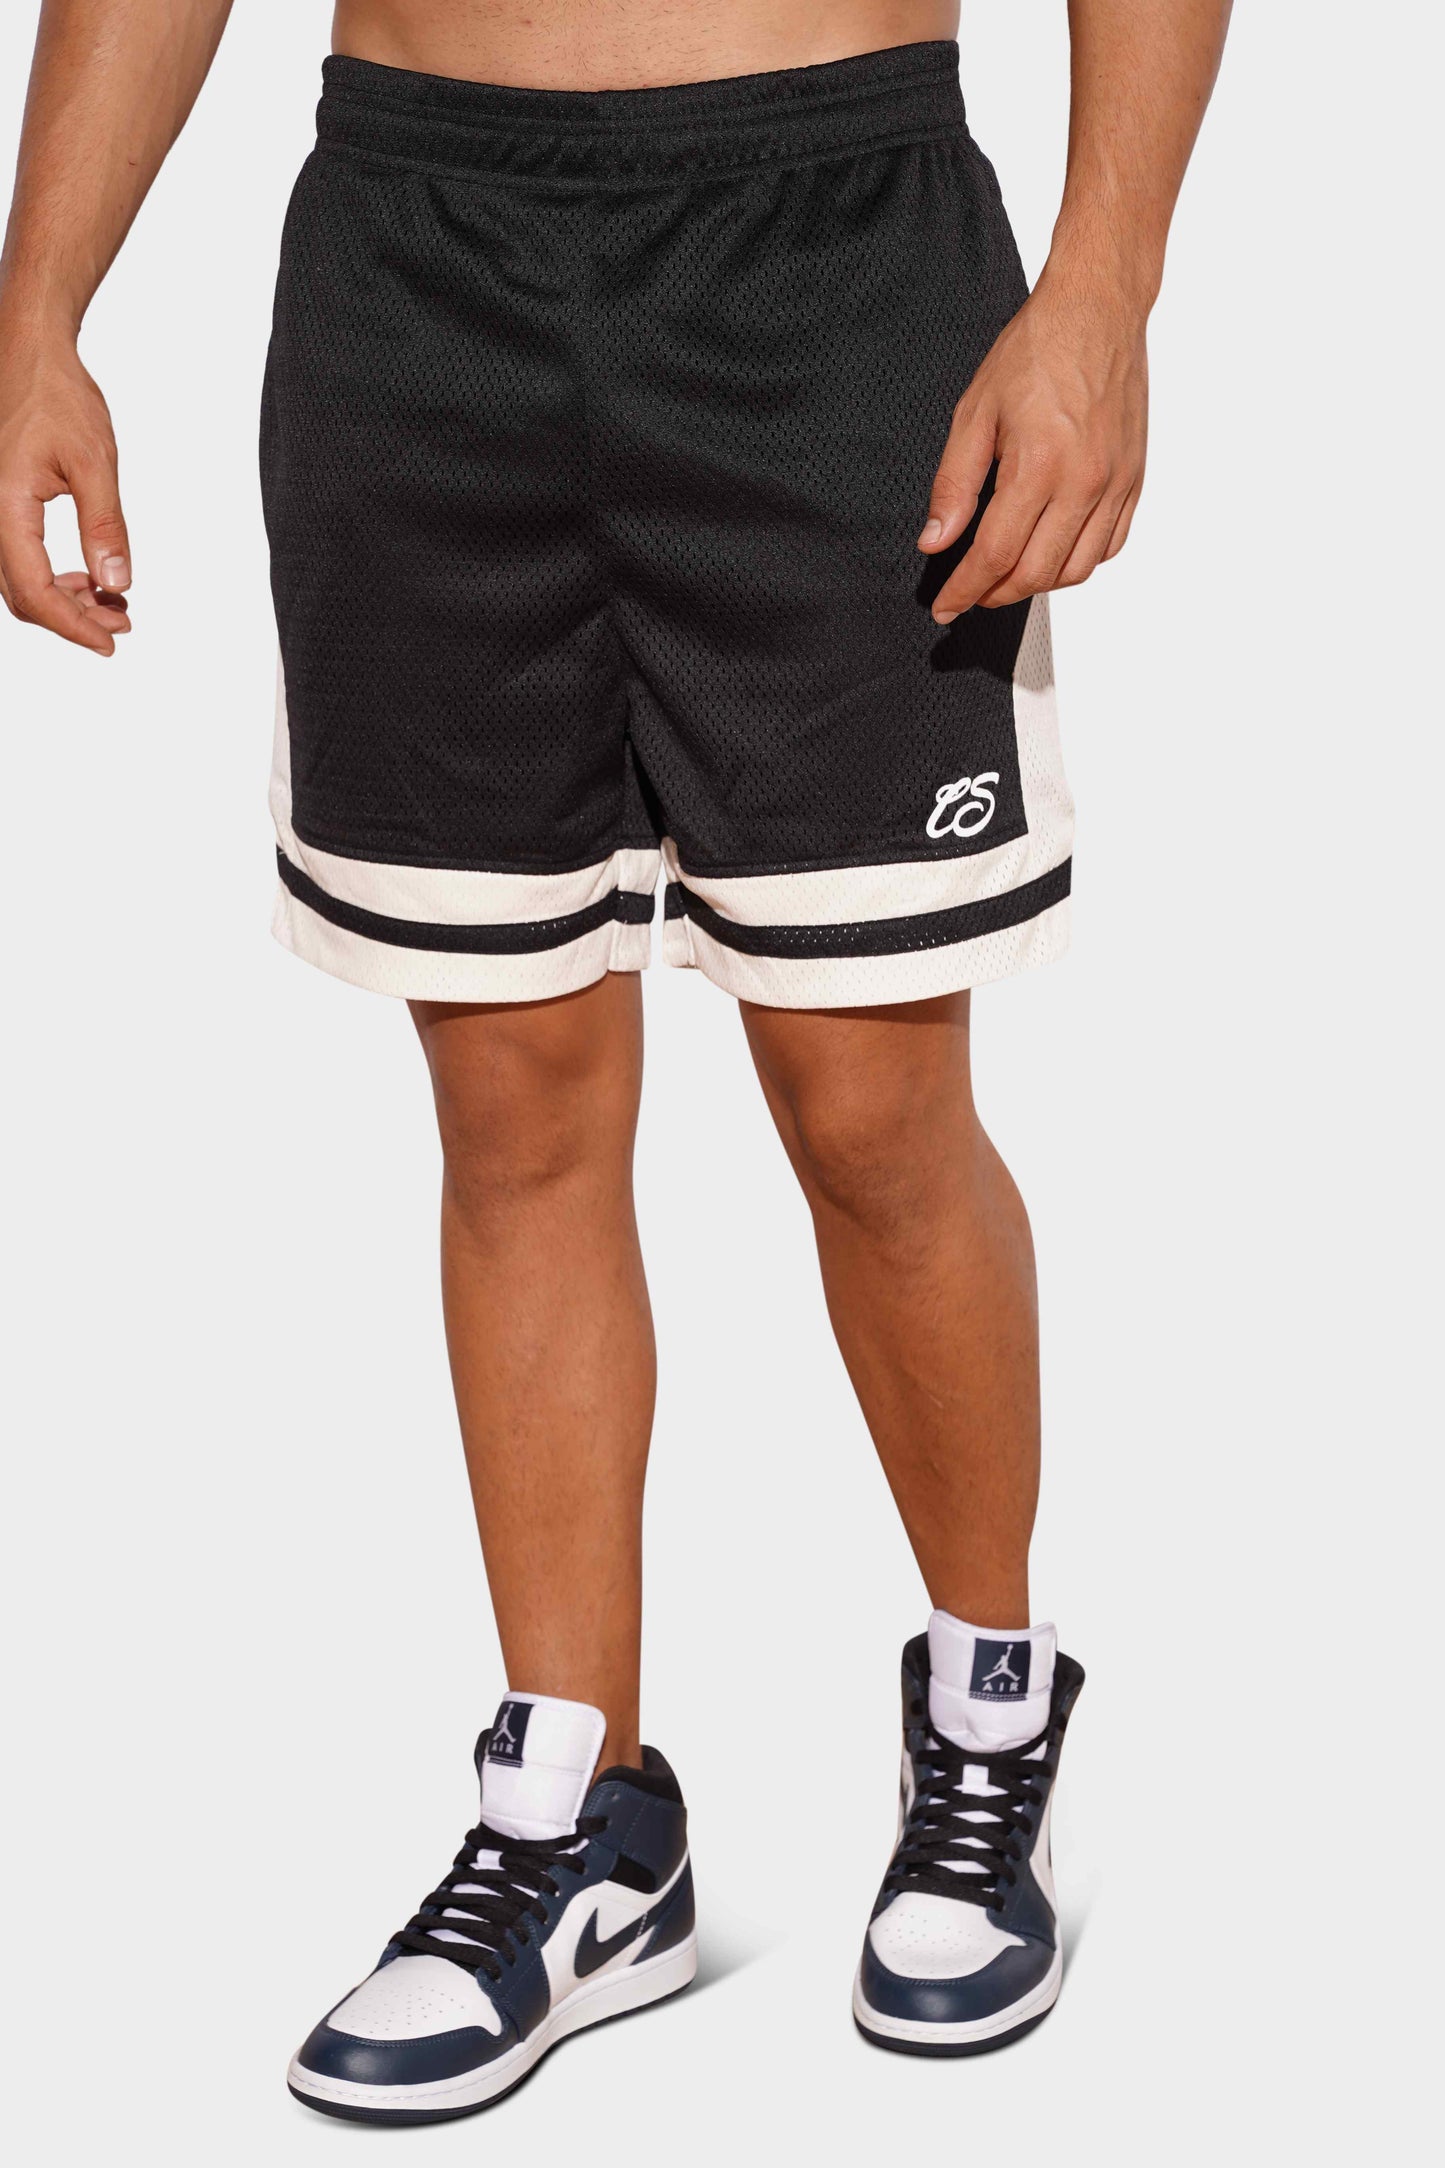 Corner Store Calibrated Shorts Black/Tan